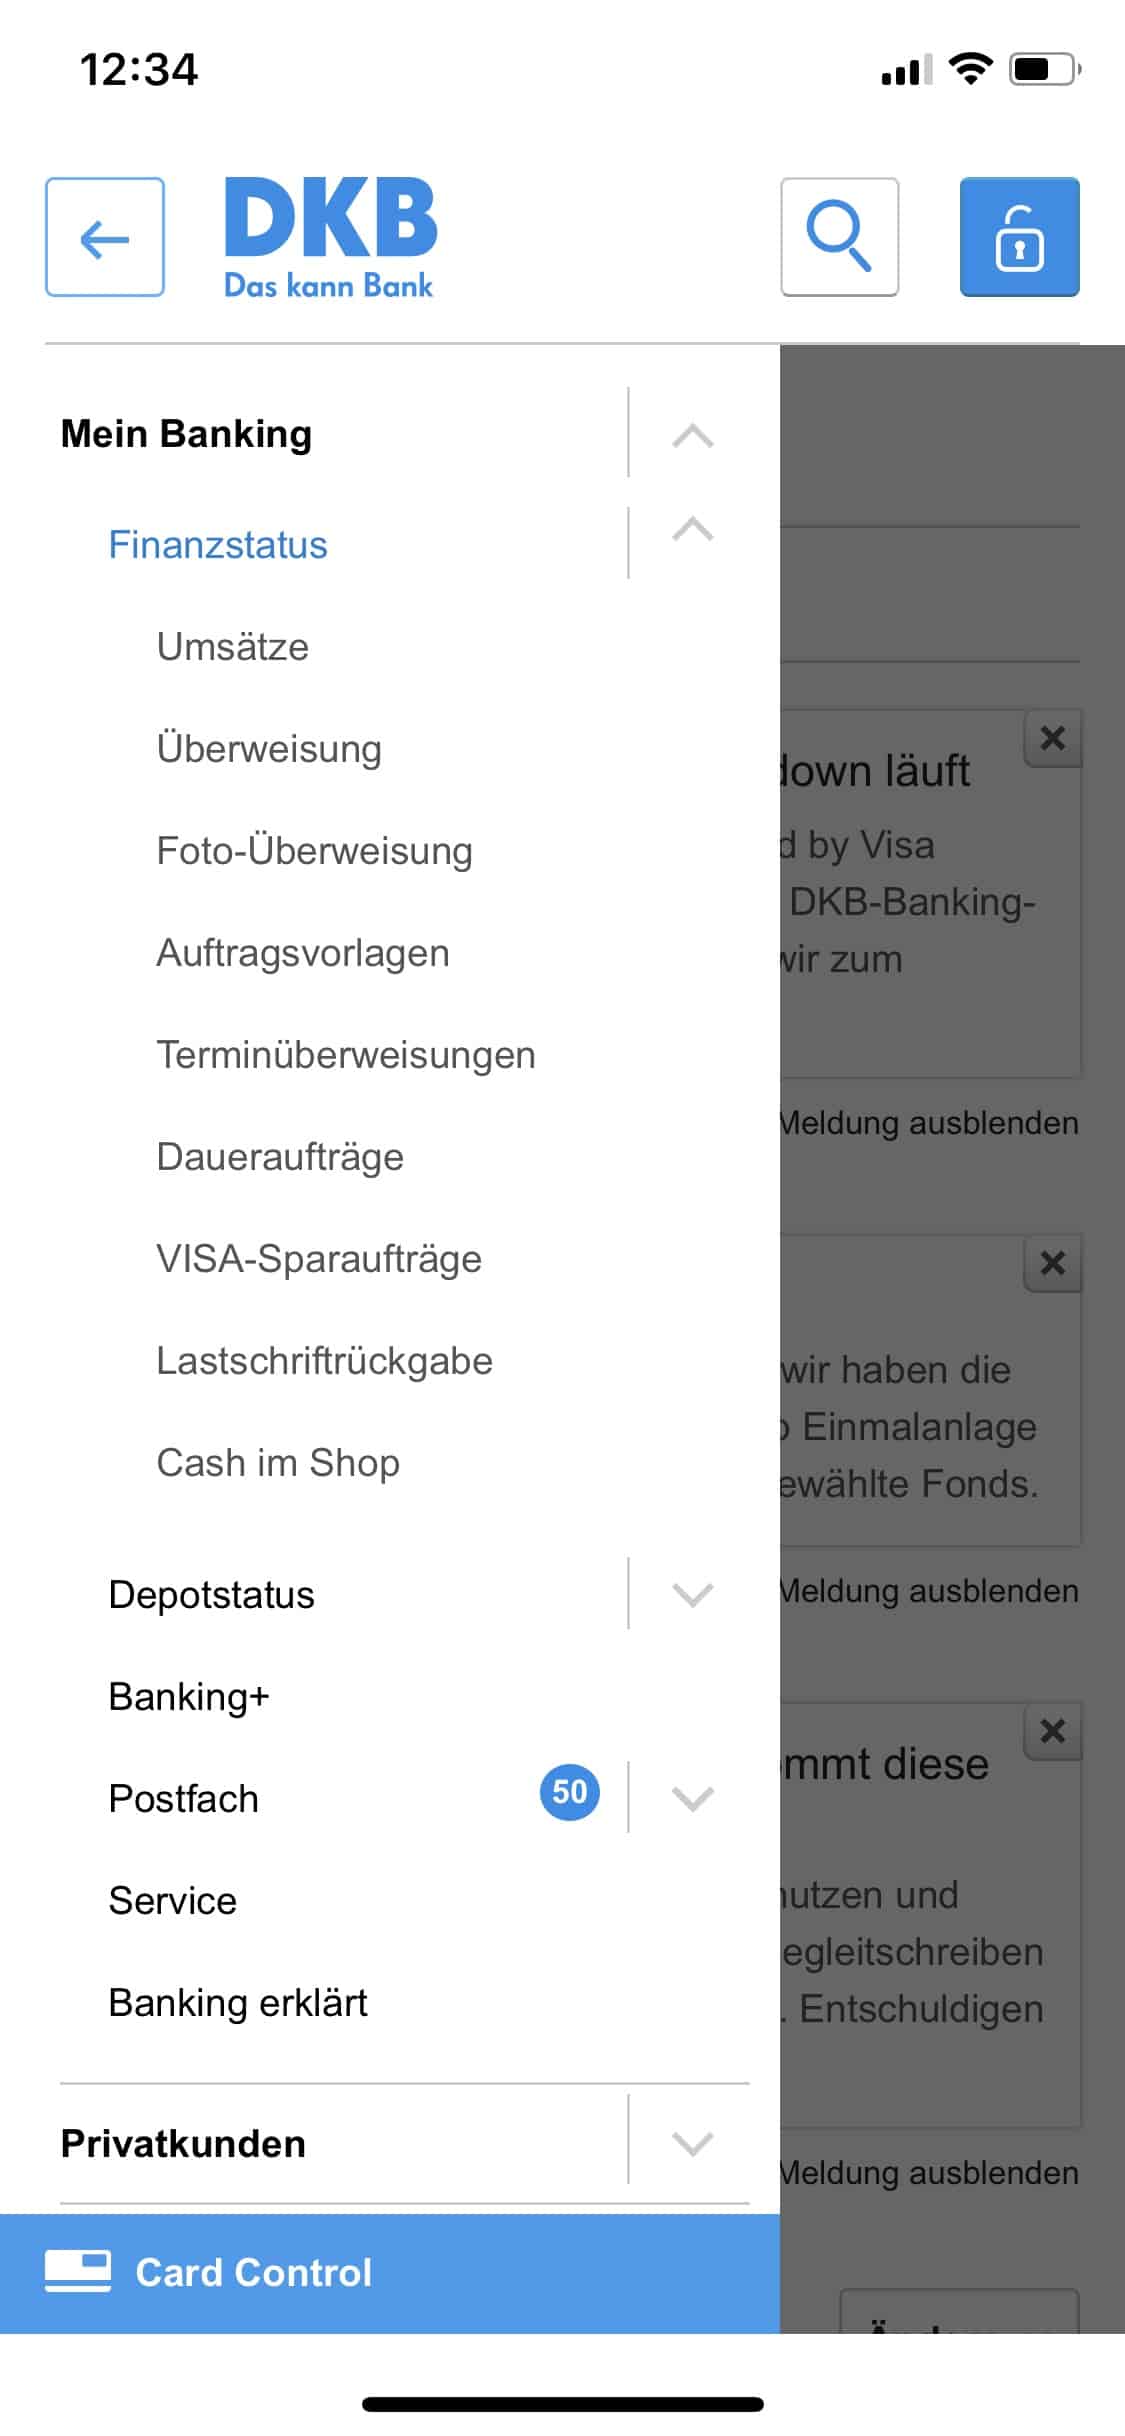 Apple iPhone - DKB-Banking-App - Startseite - Finanzstatus